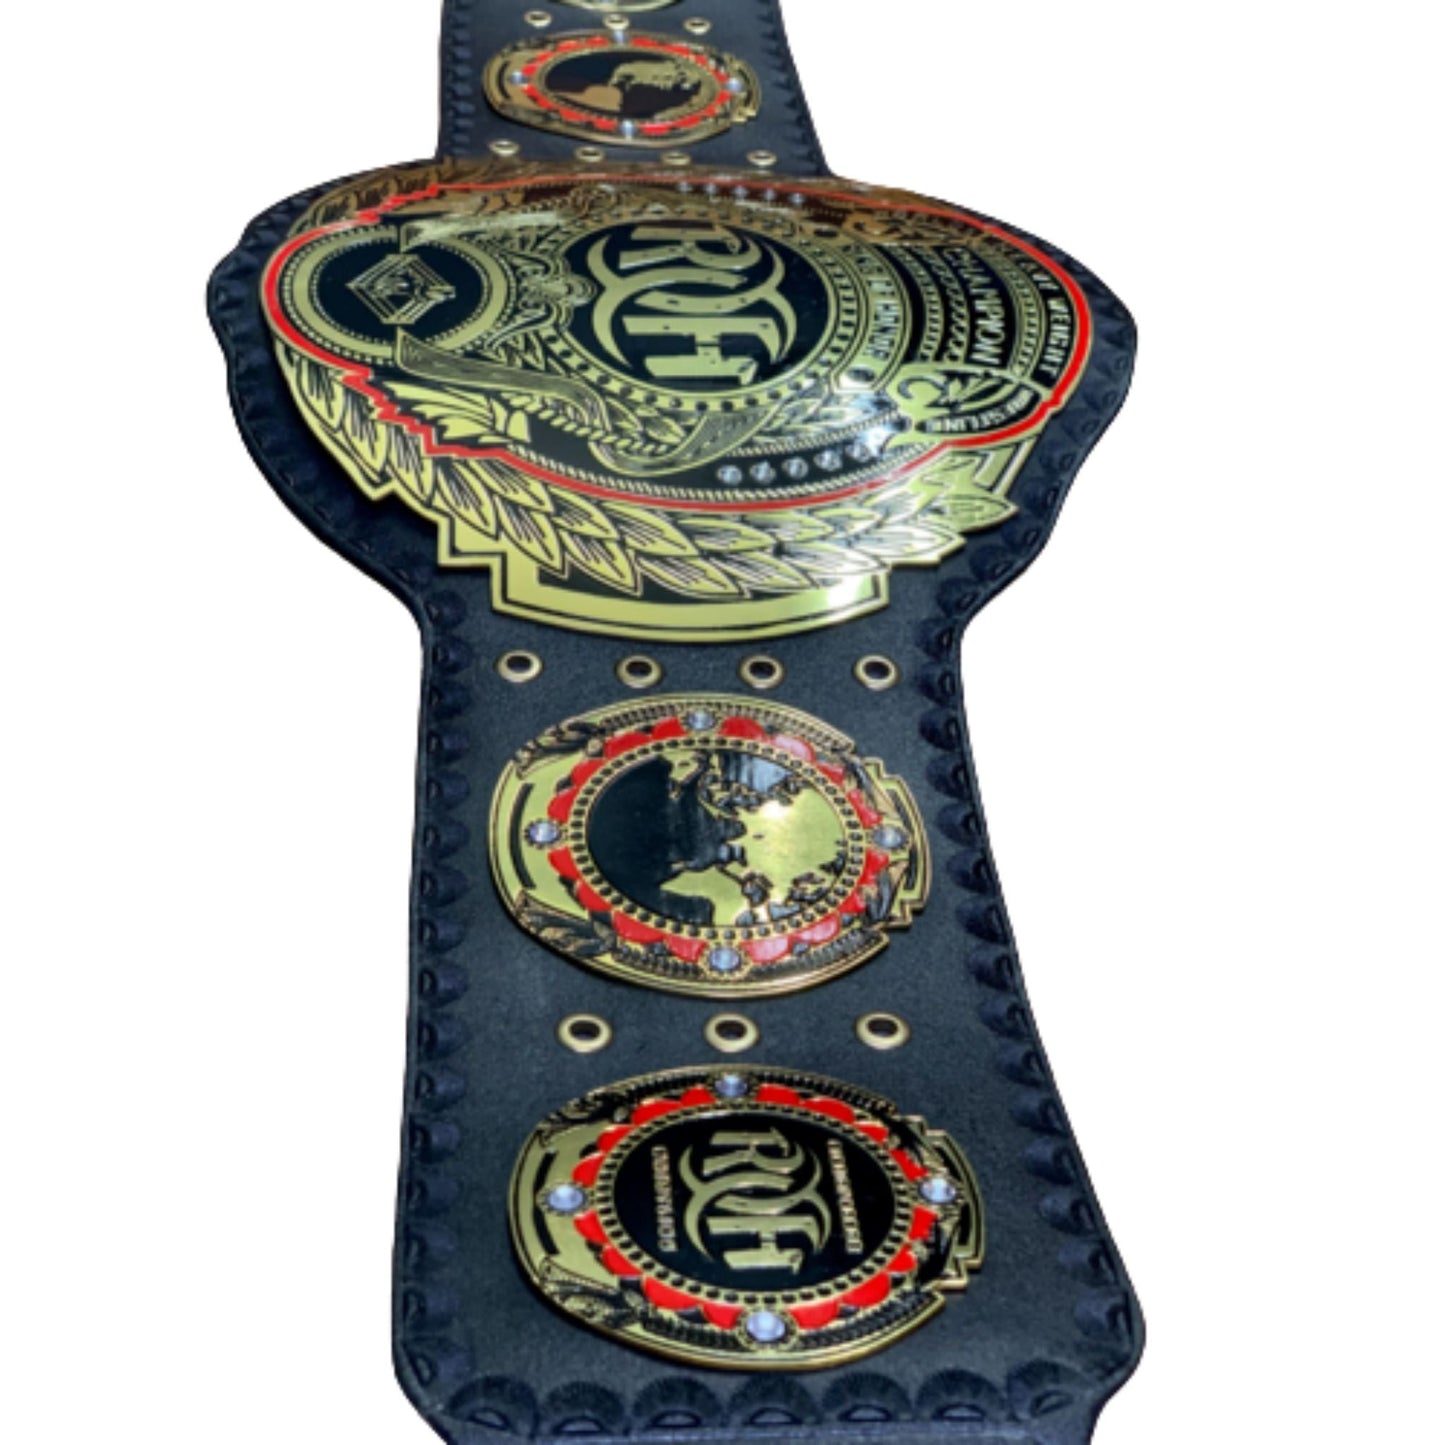 ROH Heavyweight Championship Replica Title Belt